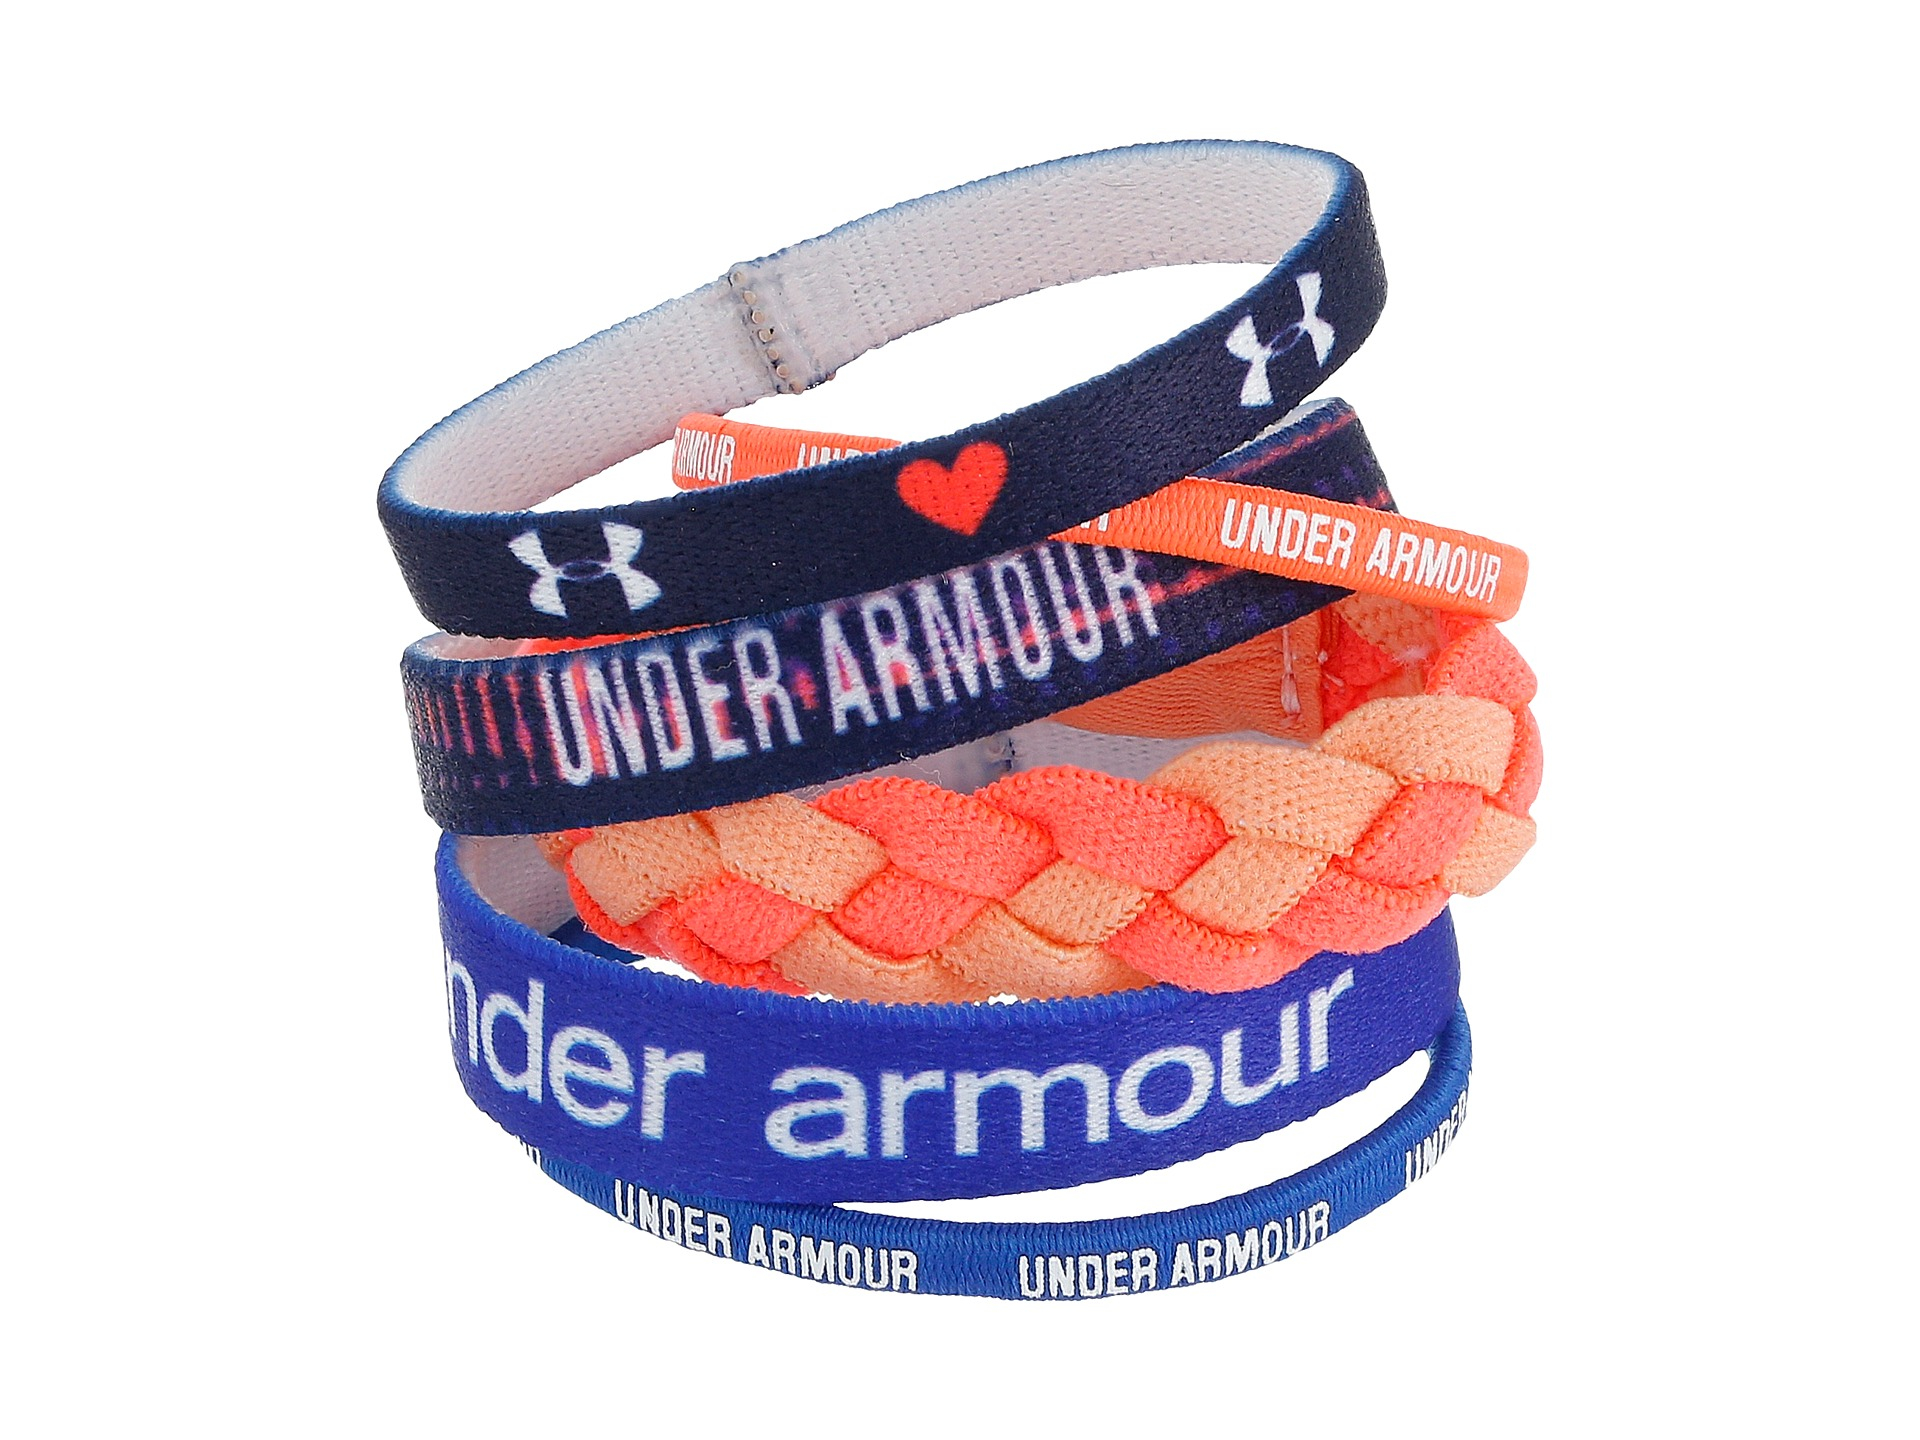 under armour rubber bracelets Off 51% - sirinscrochet.com